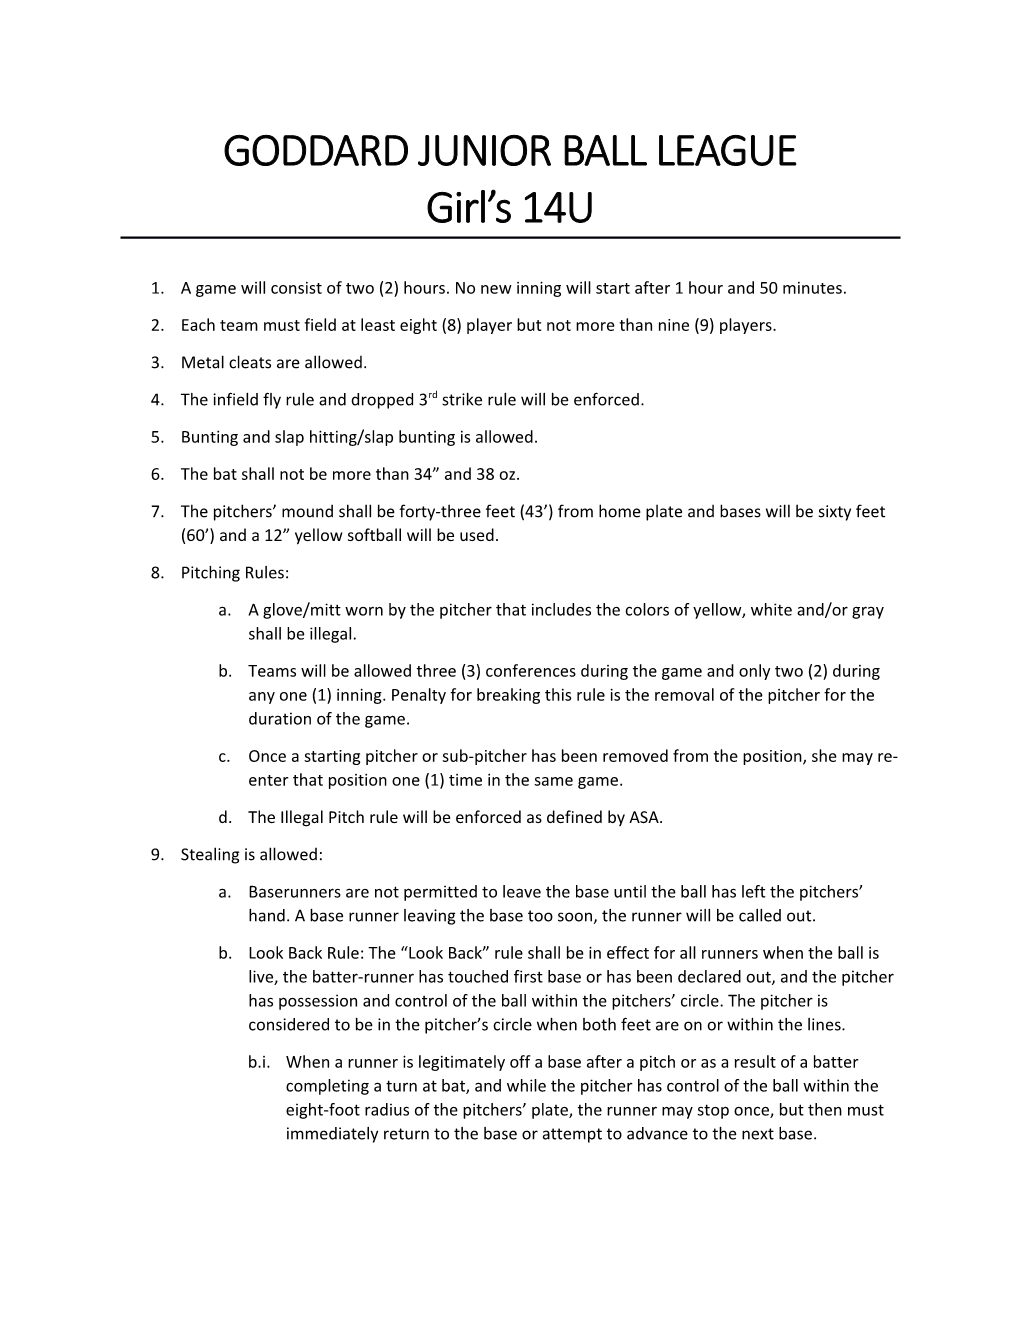 Goddard Junior Ball League